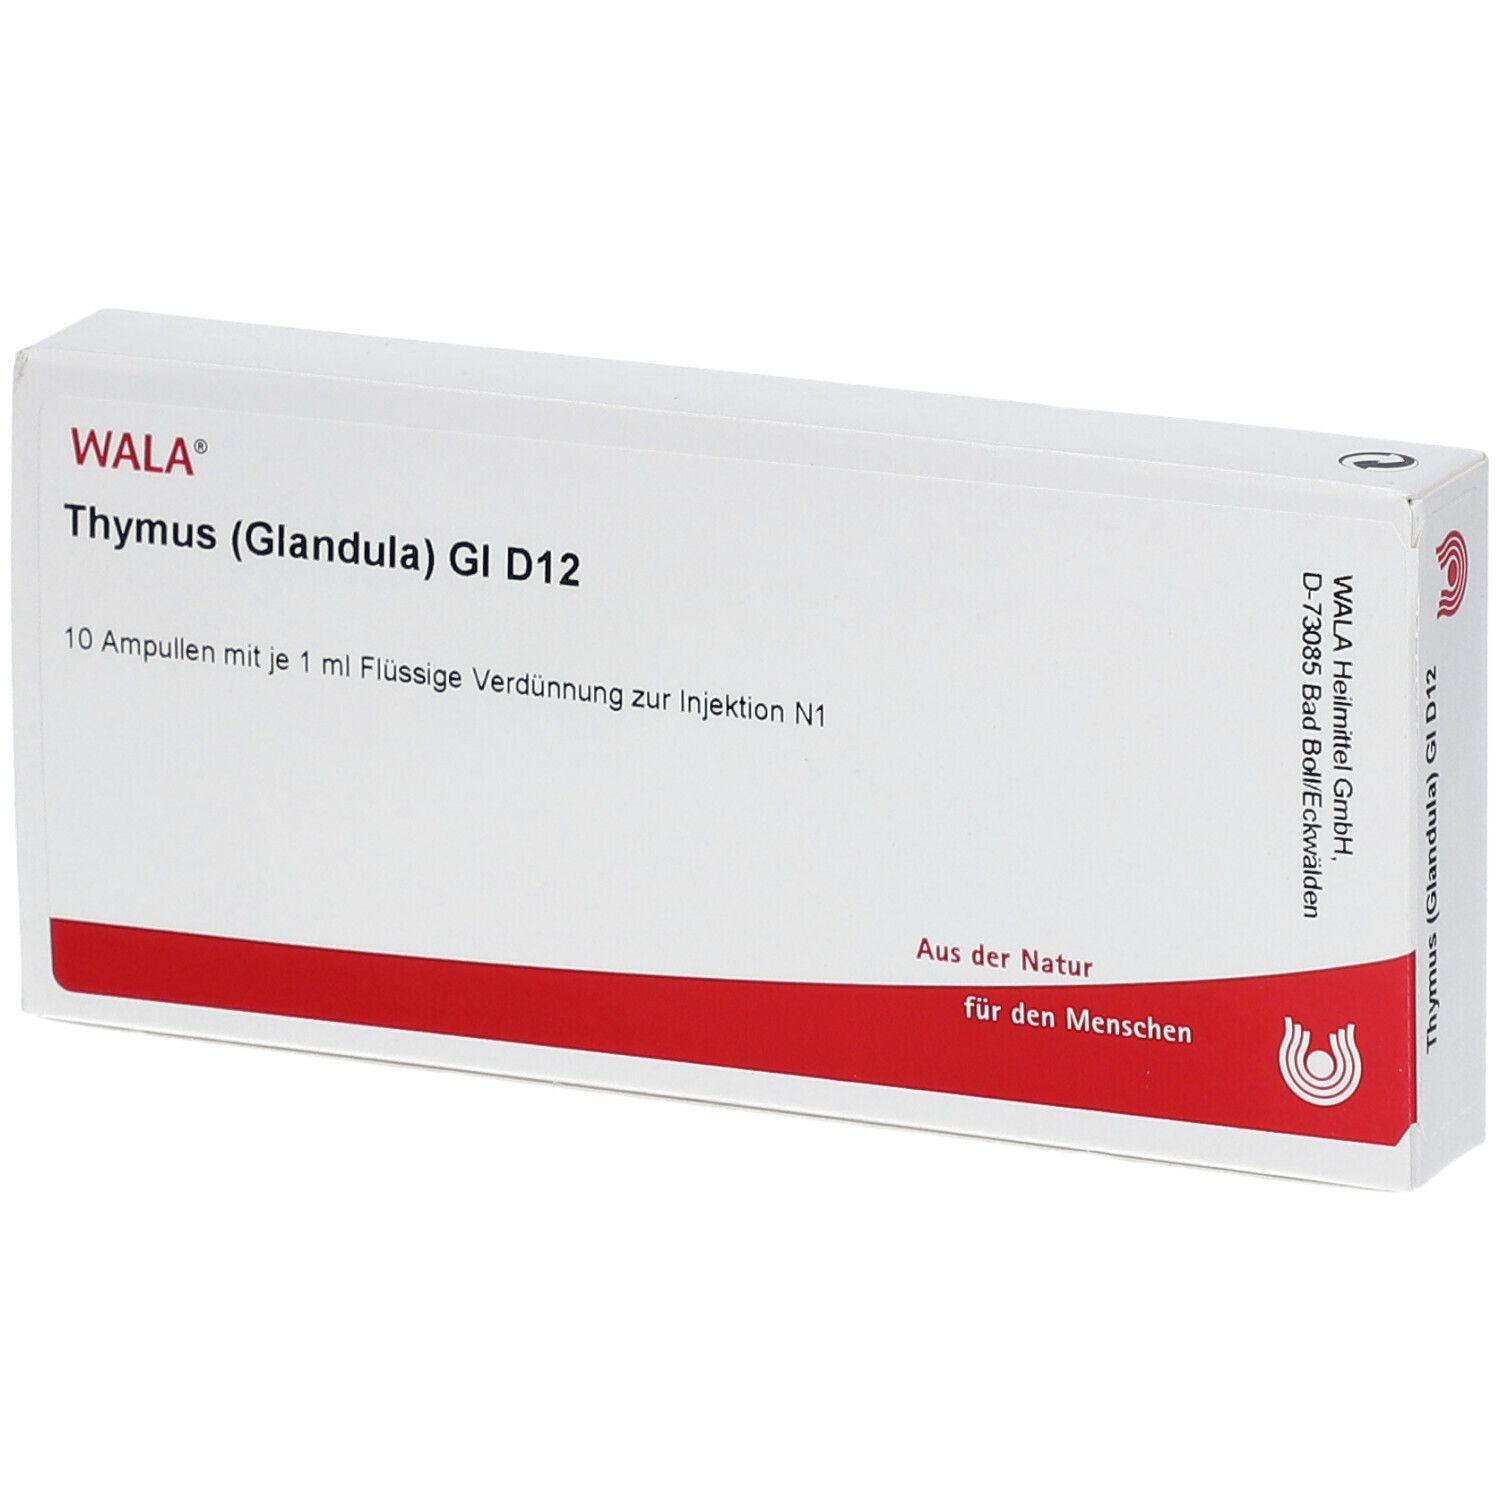 Wala® Thymus Glandula Gl D 12